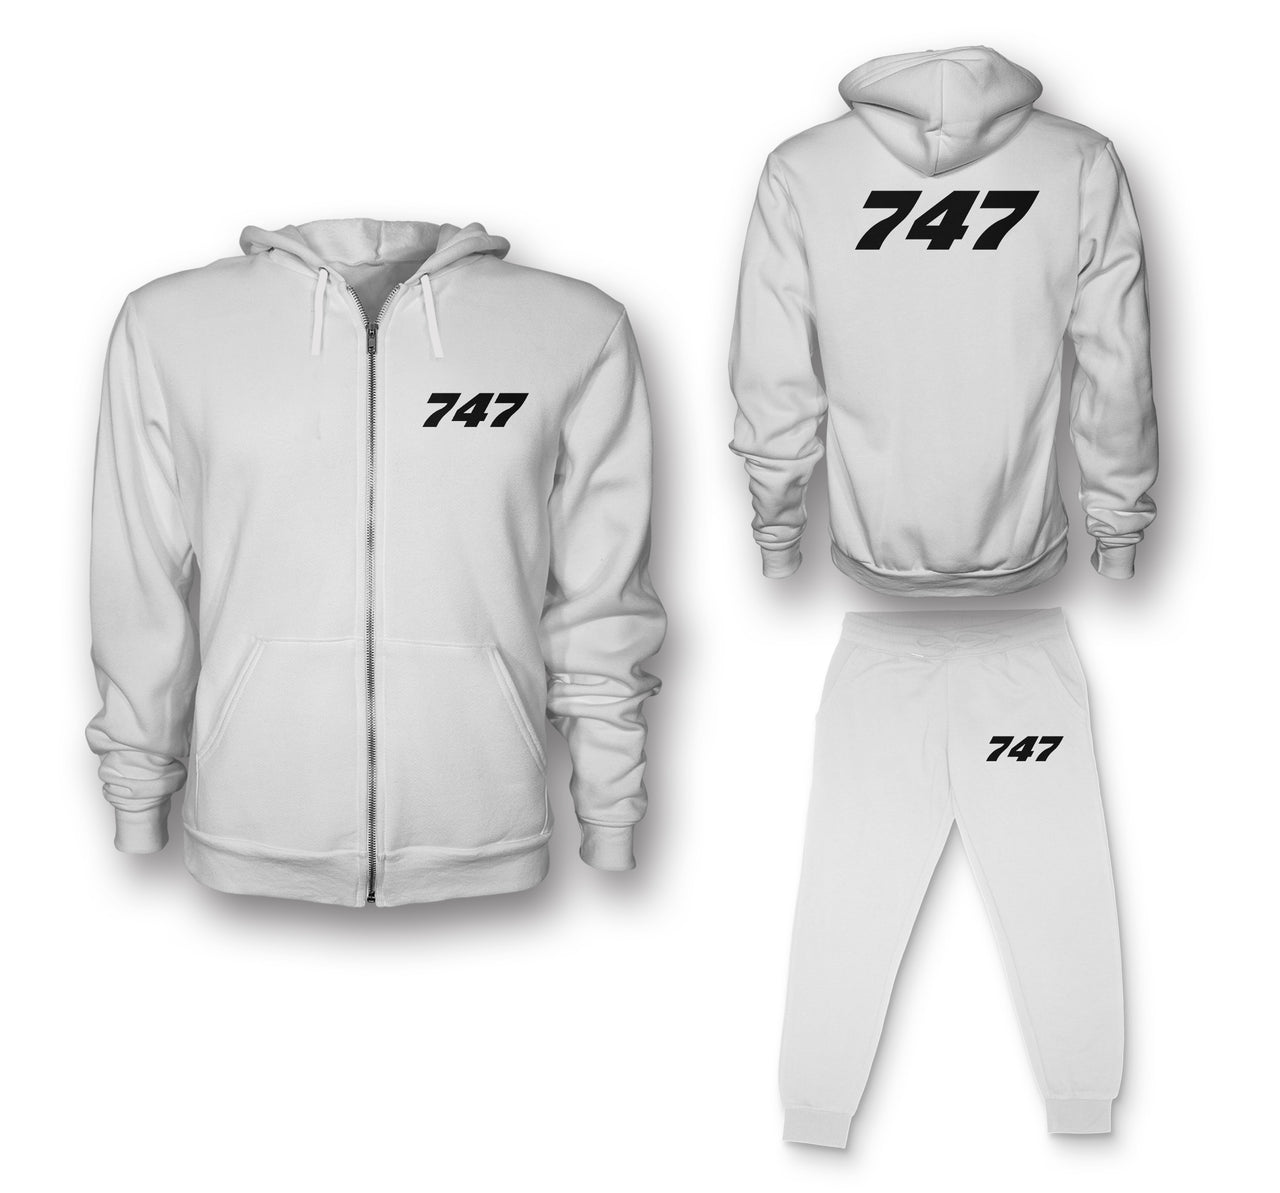 747 Flat Text Designed Zipped Hoodies & Sweatpants Set